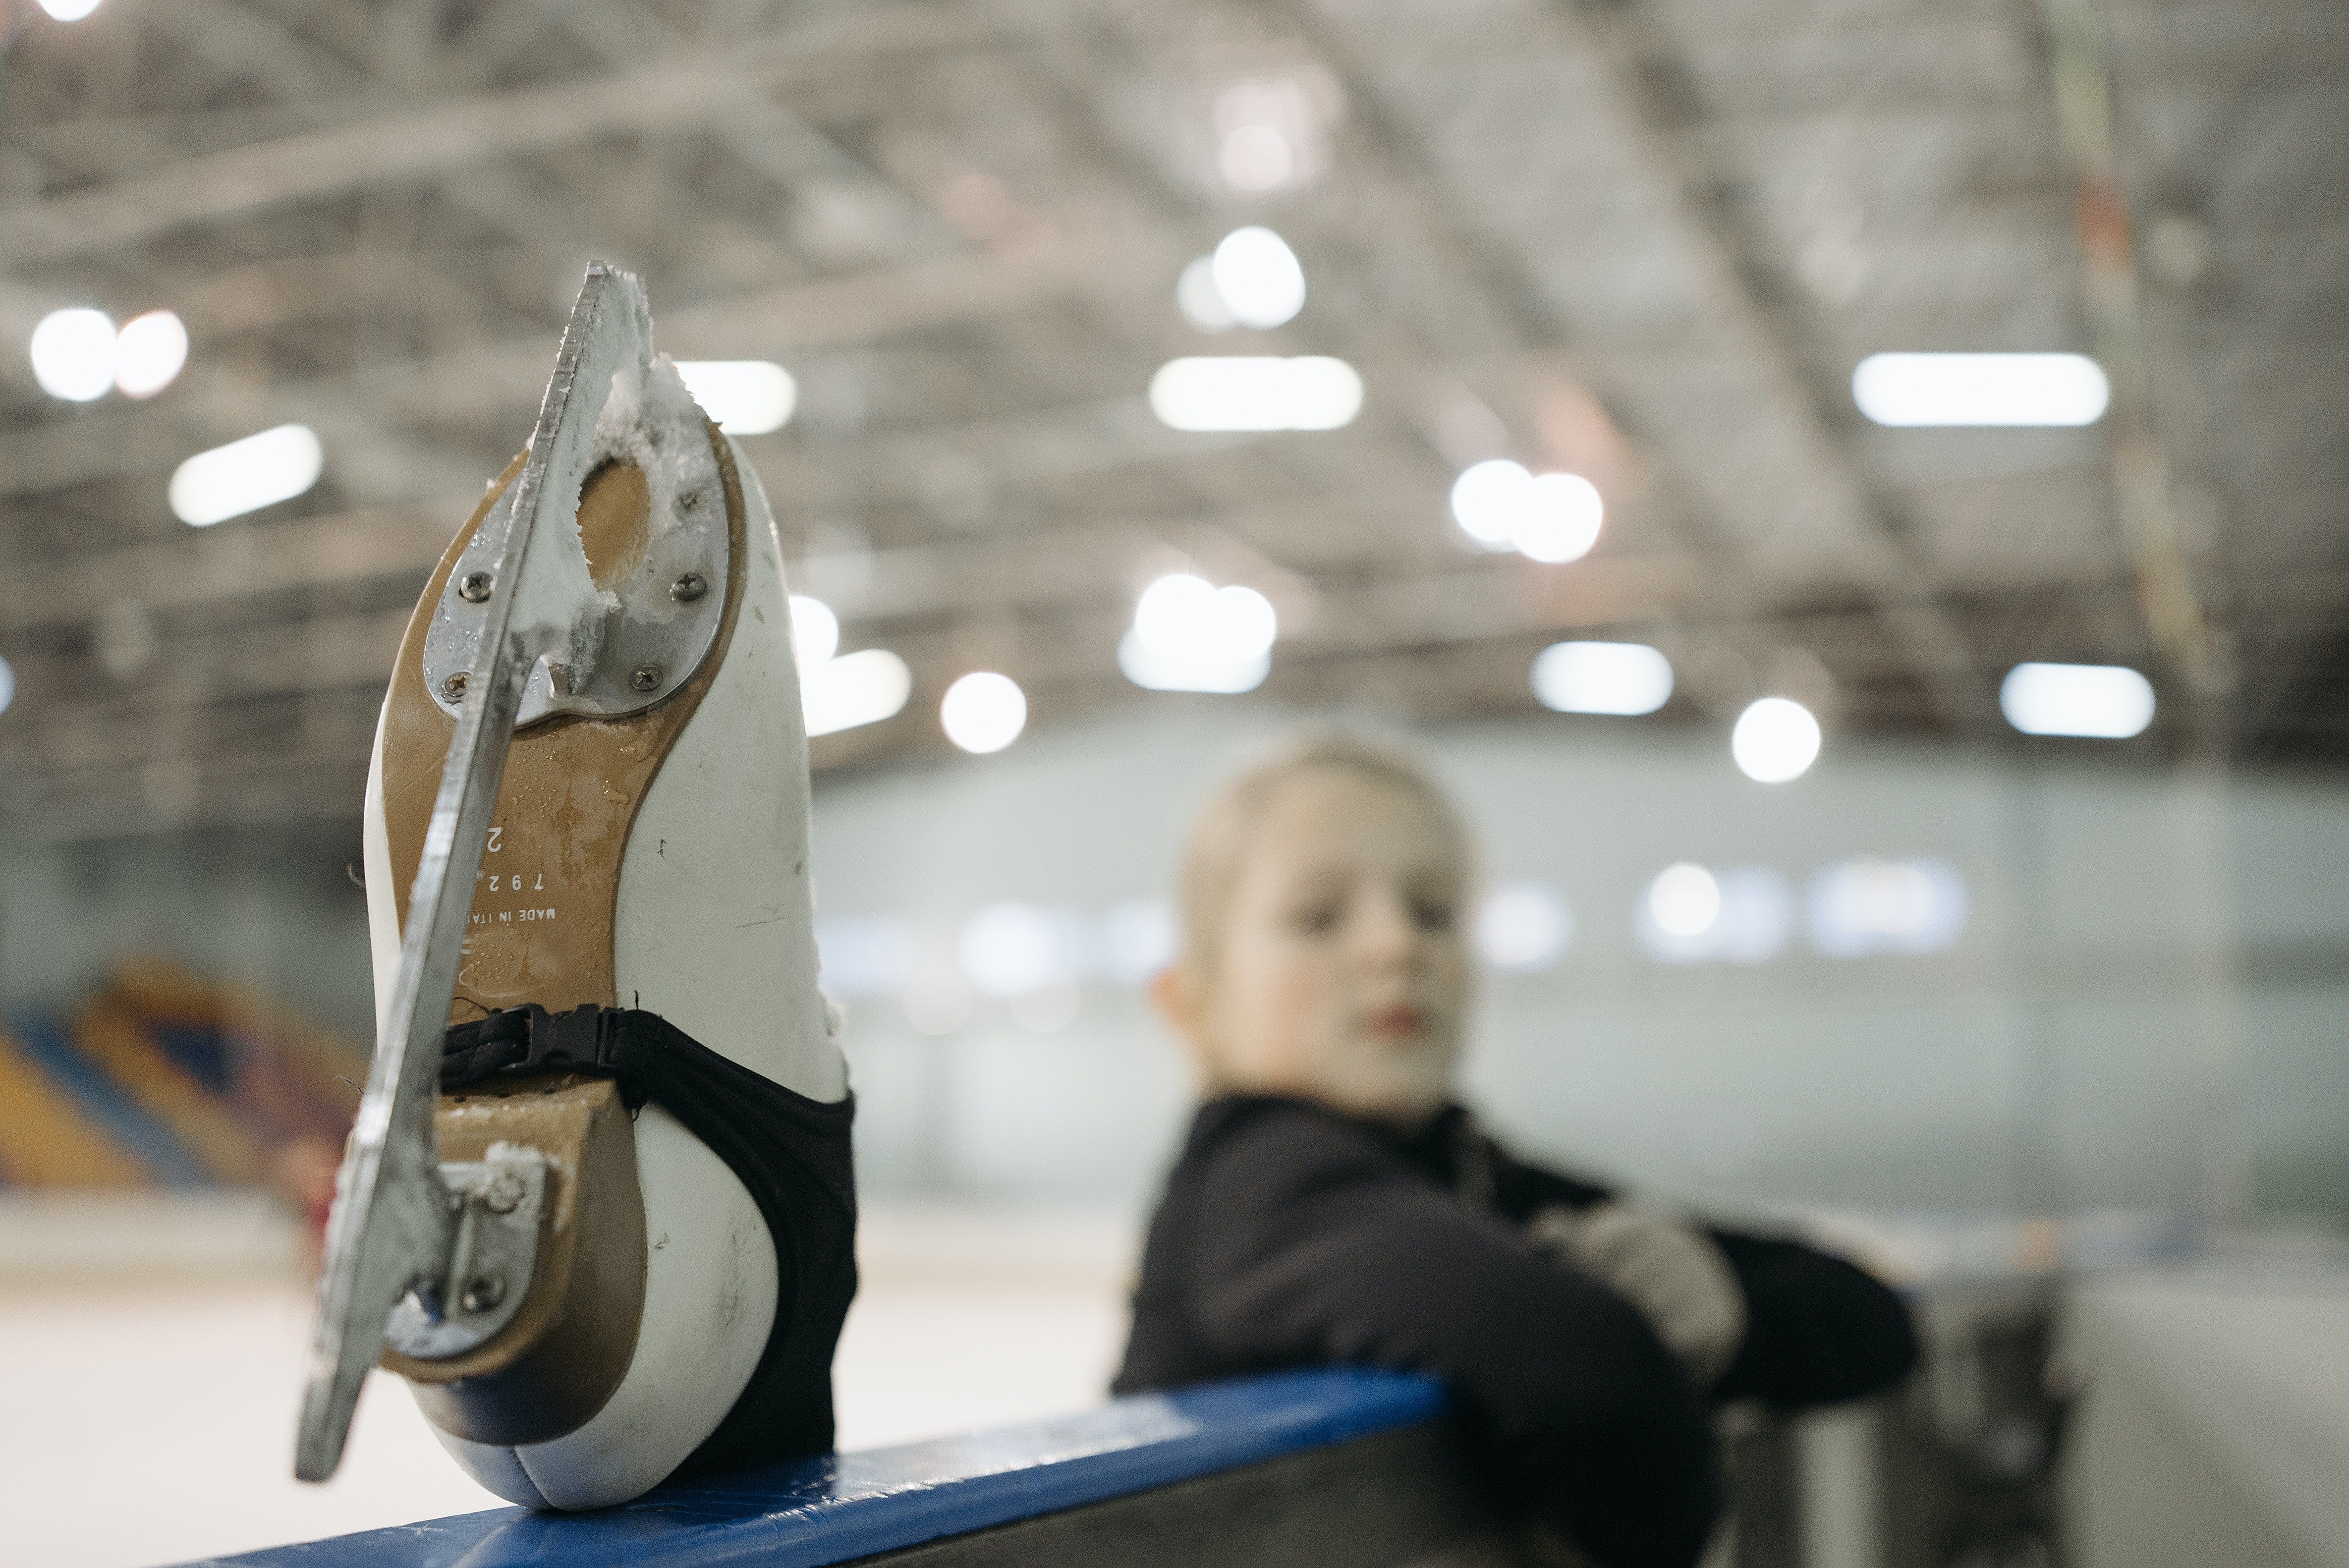 The blade on Vivian's old skates broke. | Source: Pexels